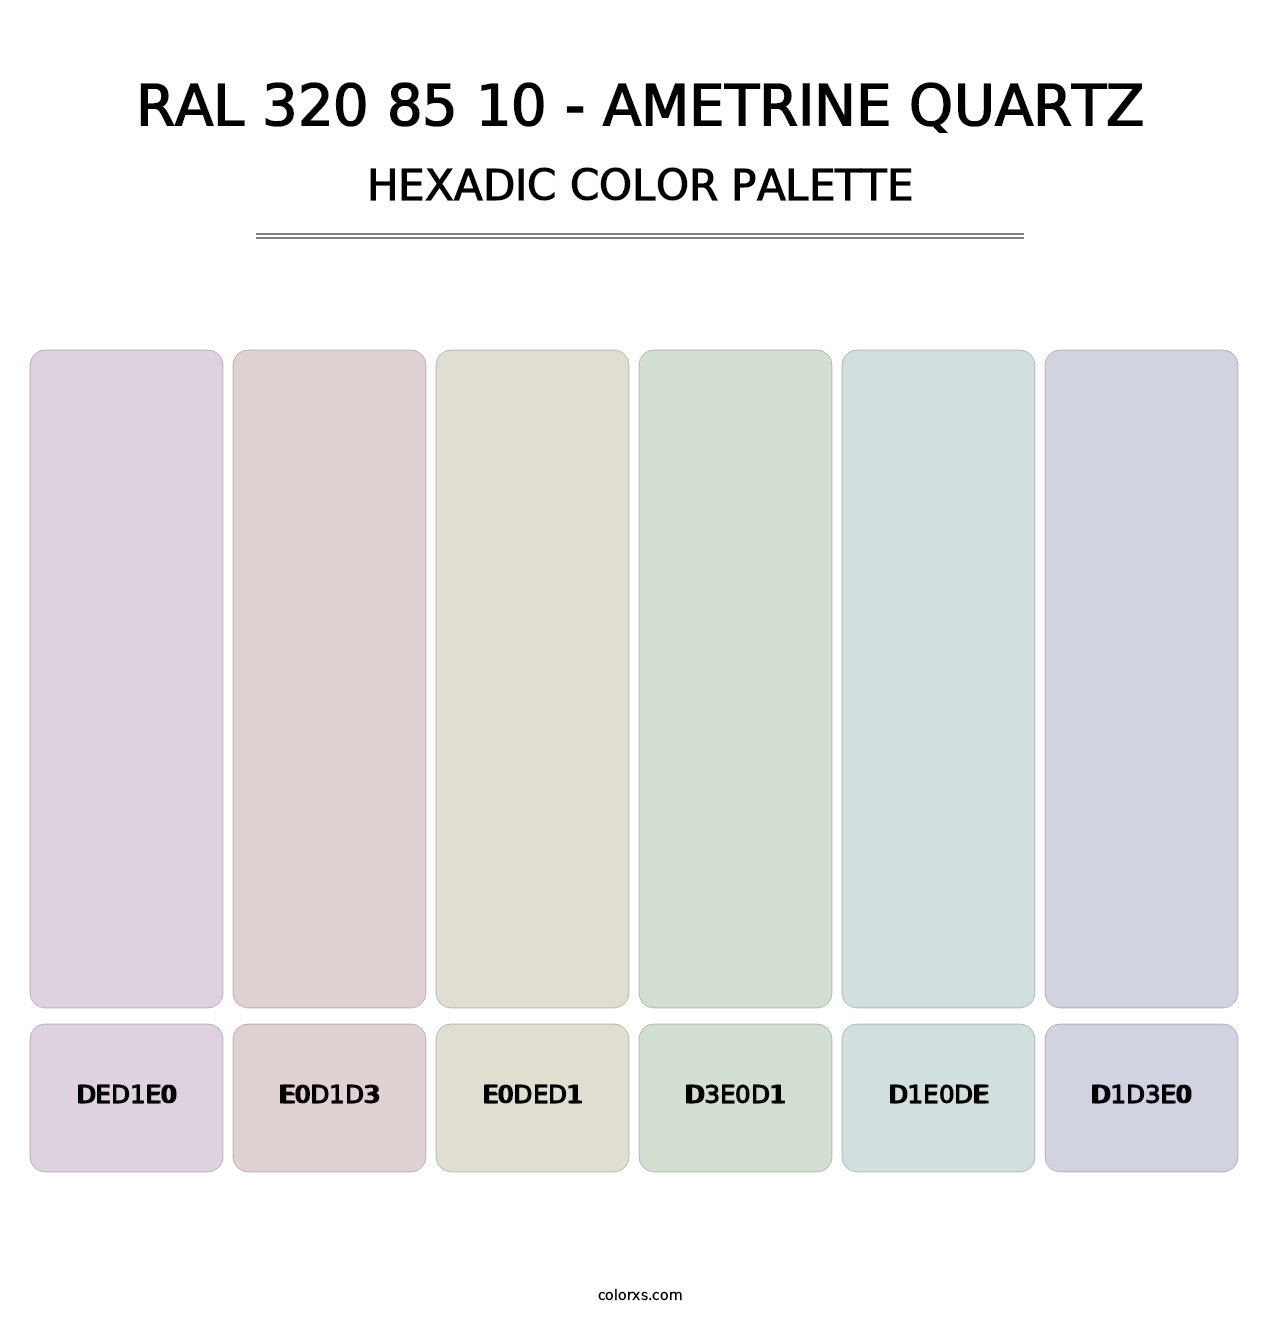 RAL 320 85 10 - Ametrine Quartz - Hexadic Color Palette